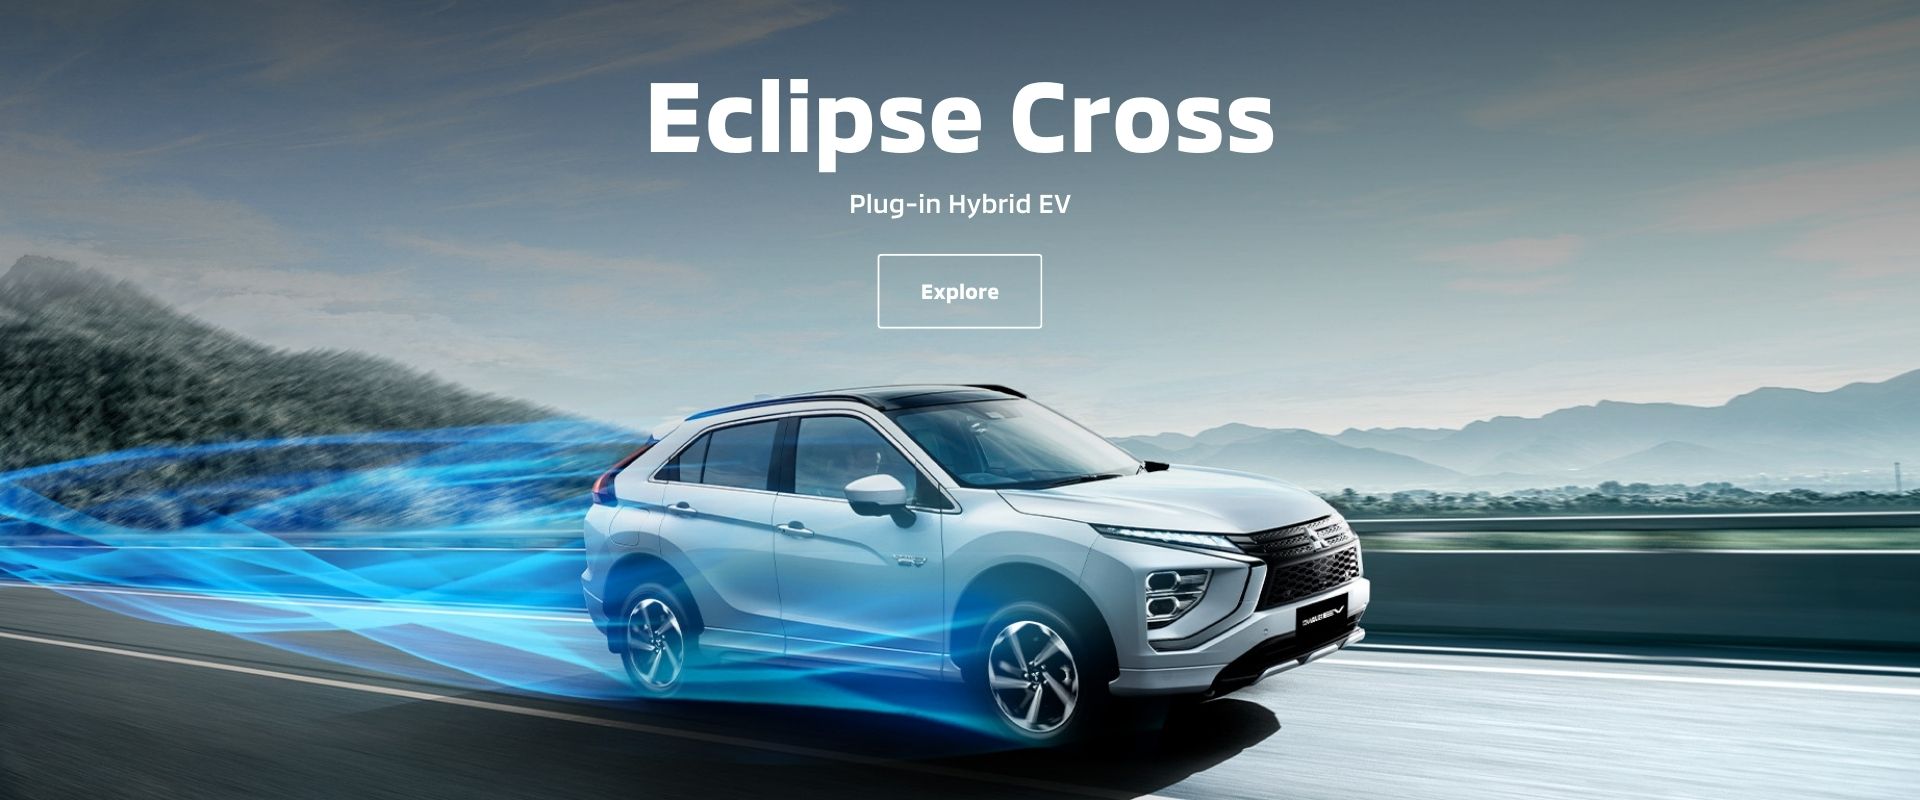 Eclipse Cross Plug-in Hybrid EV. Explore